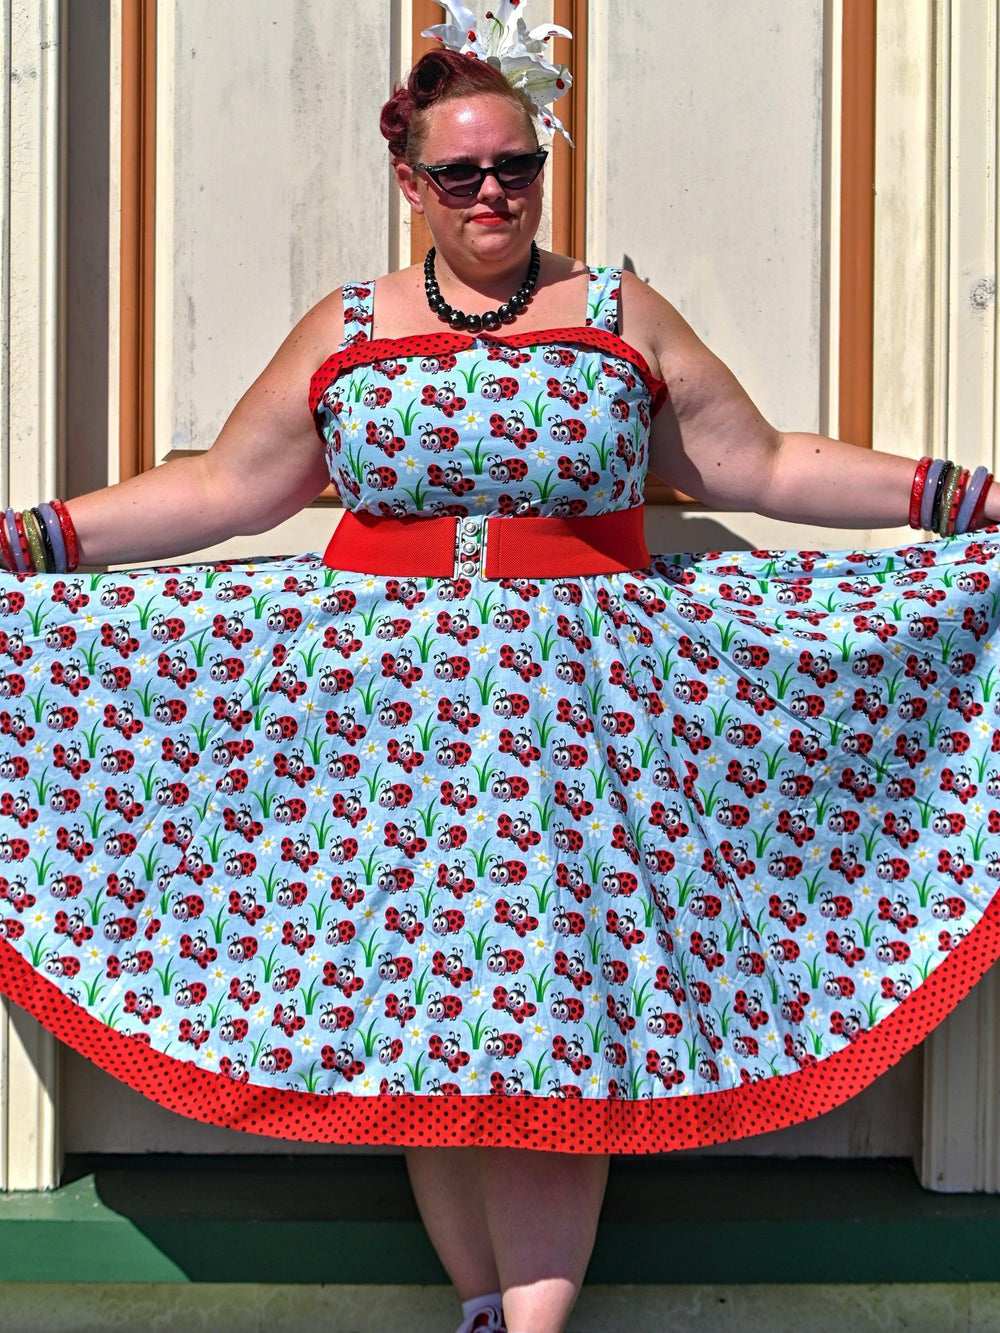 Ladybugs Rockabilly Swing Dresses